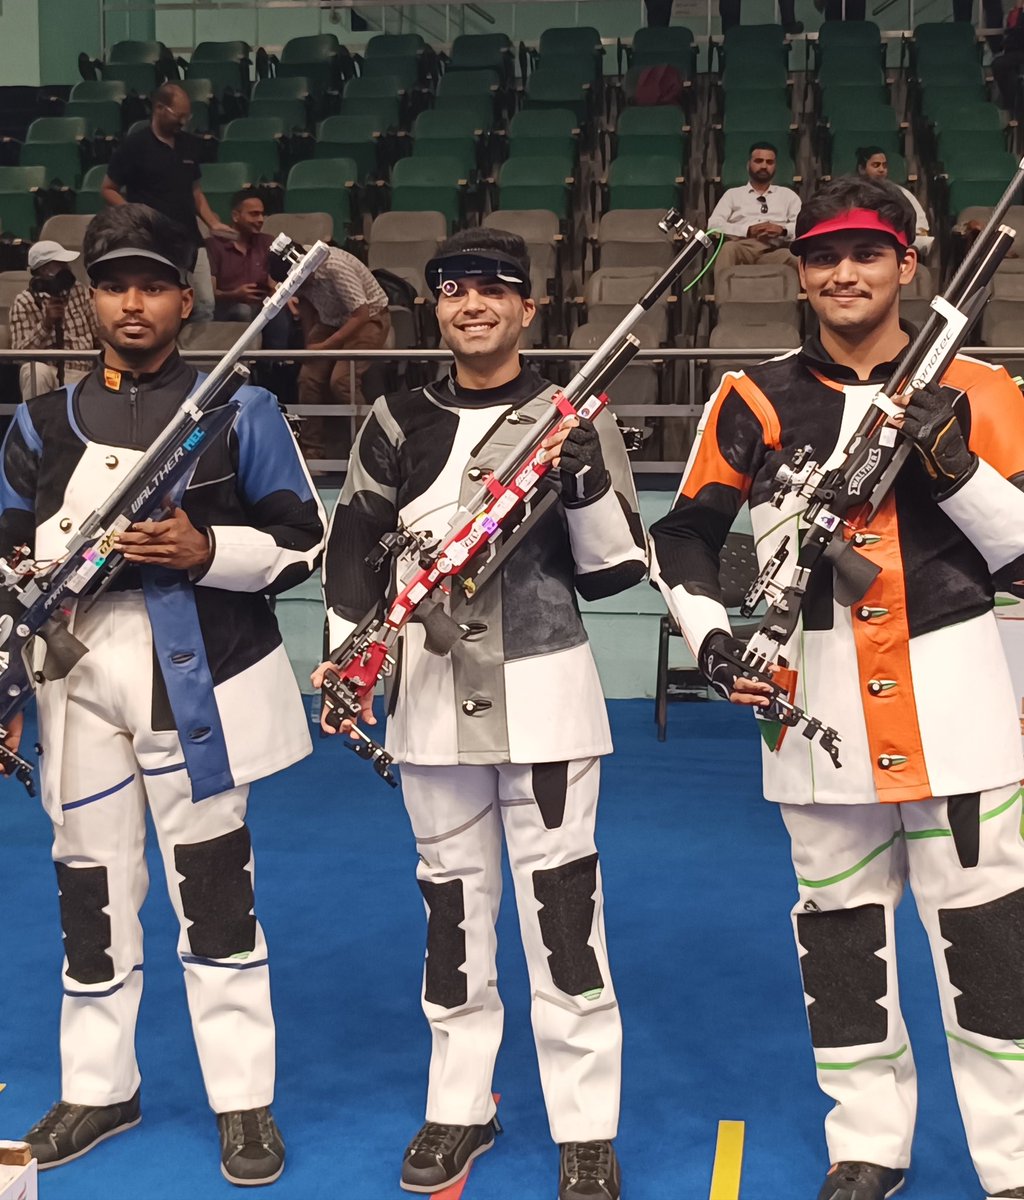 OST Update: Arjun Babuta (centre) wins the 10M Air Rifle OST T1, ahead of Rudrankksh Patil (right) & Sri Karthik Sabari Raj (left). Arjun’s 254 was a huge 2.8 ahead of his nearest rival. #OlympicSelectionTrials #Road2Paris #IndianShooting